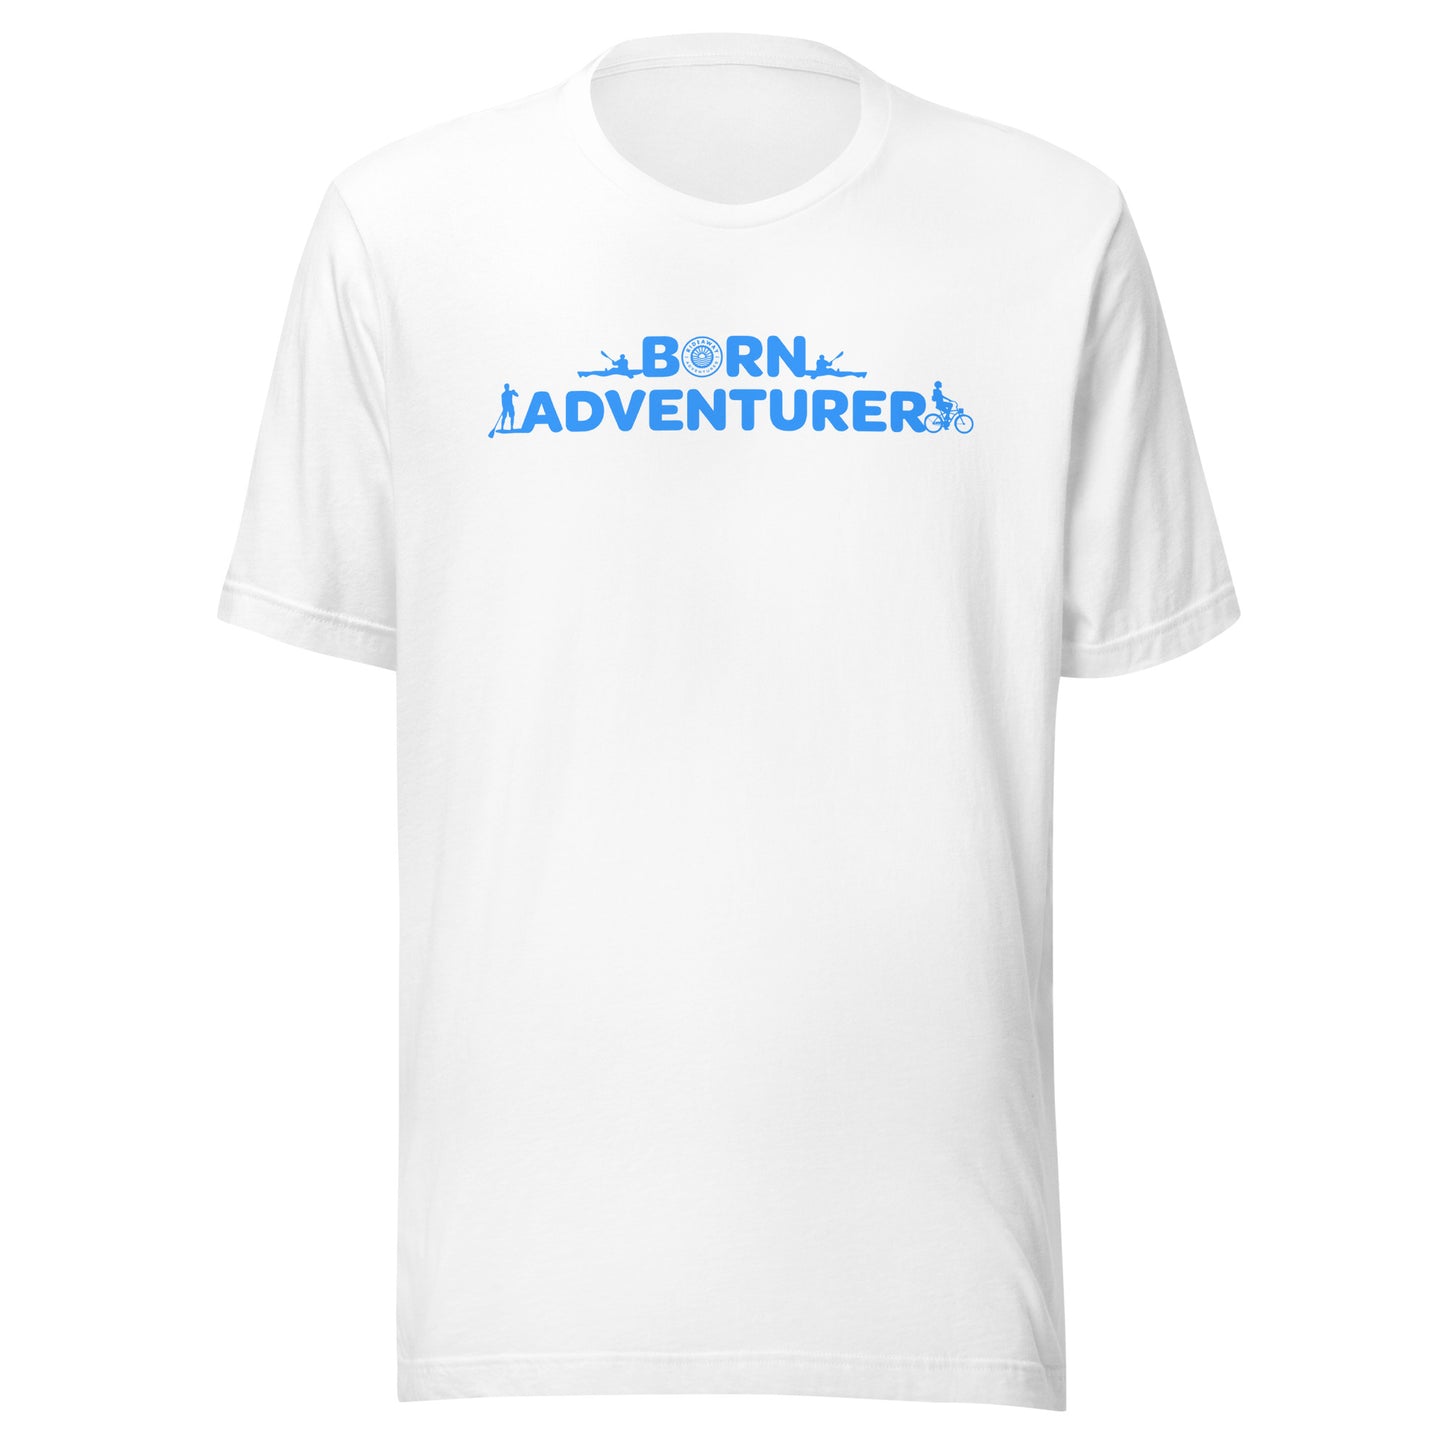 Born Adventurer - Unisex t-shirt